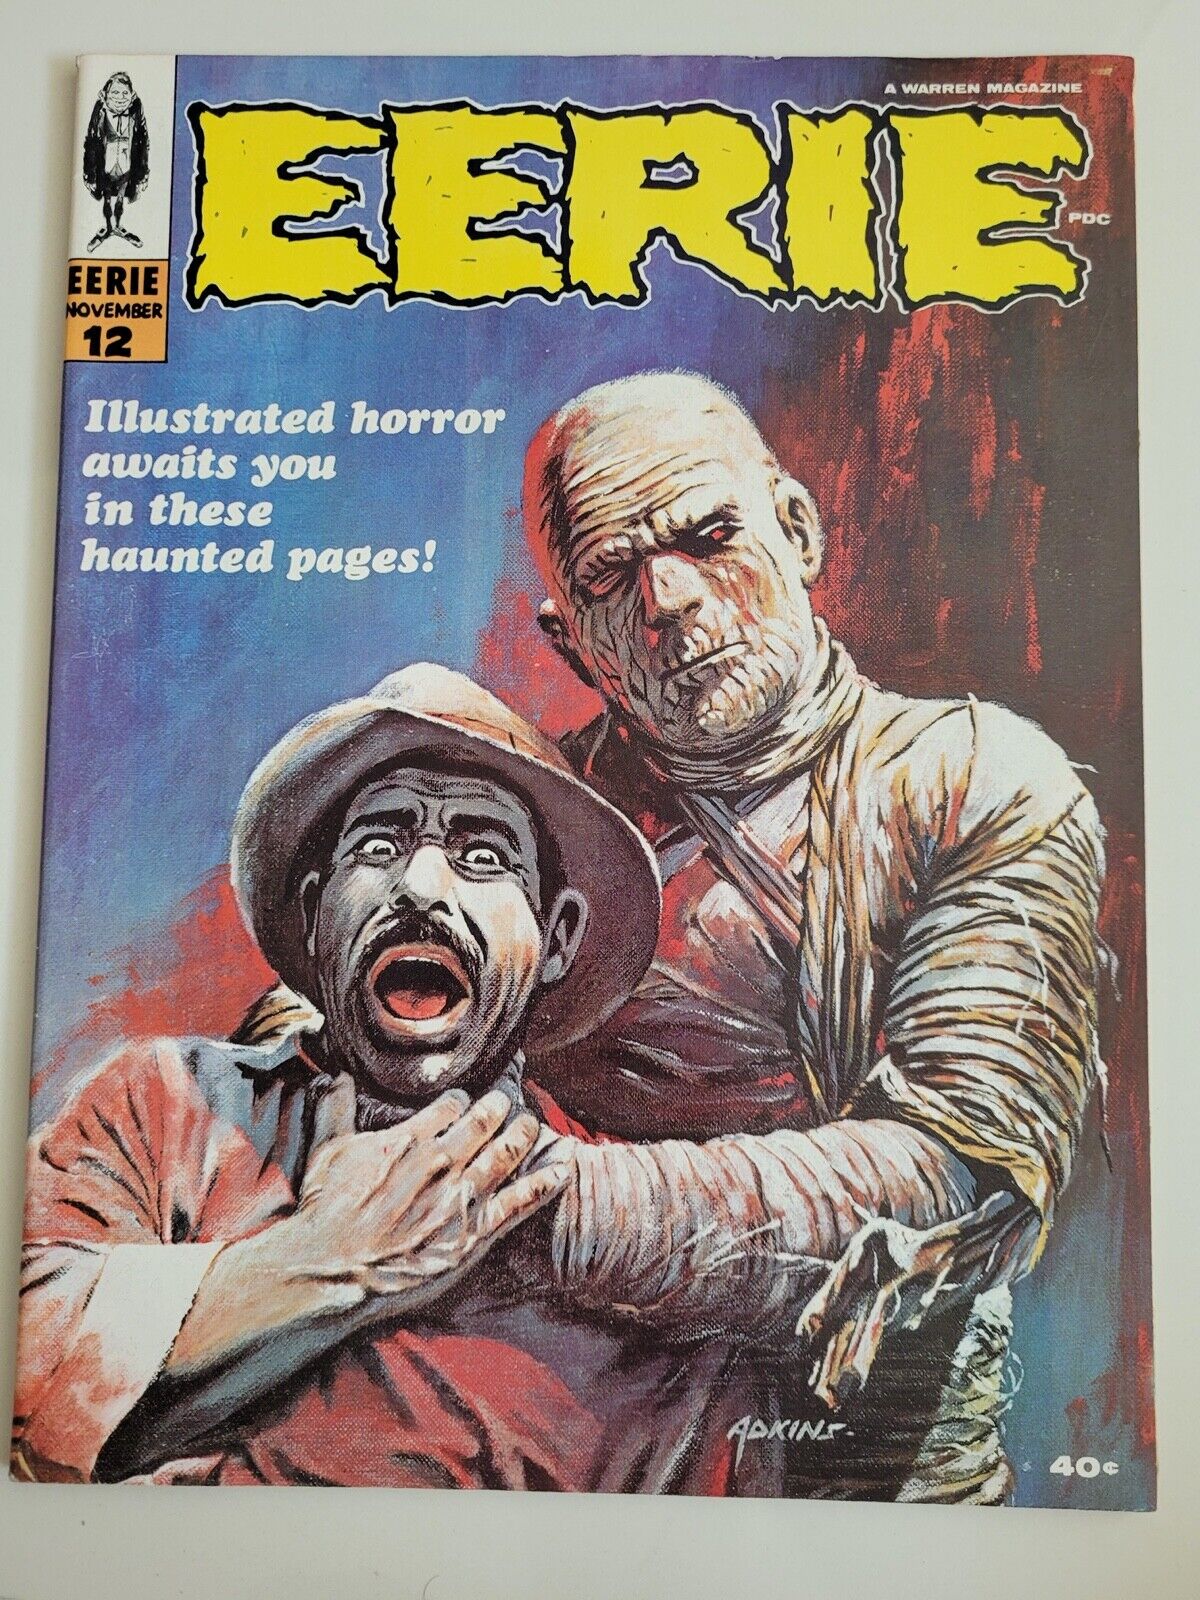 EERIE MAGAZINE Issue #12 NOVEMBER 1967 WARREN MAGAZINE HORROR DAN ADKINS COVER